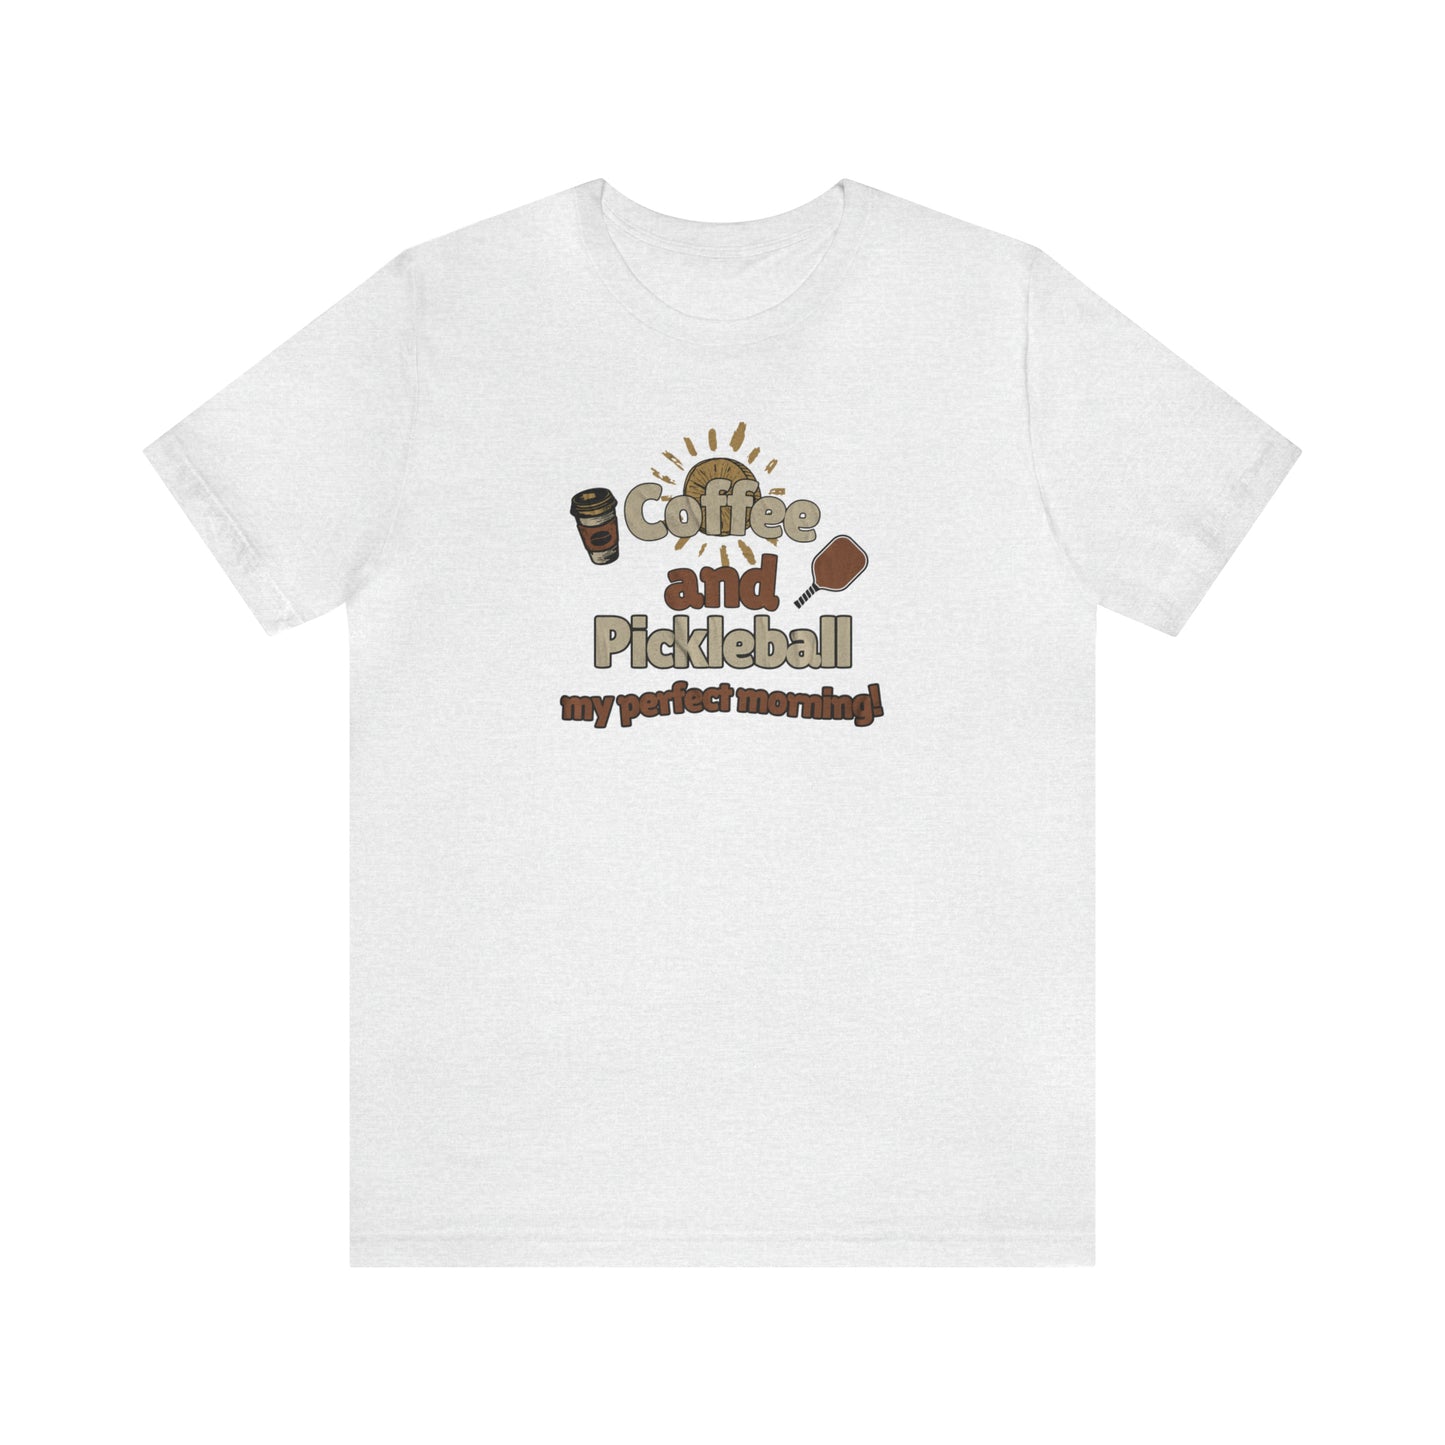 Perfect Morning Pickleball & Coffee T-Shirt